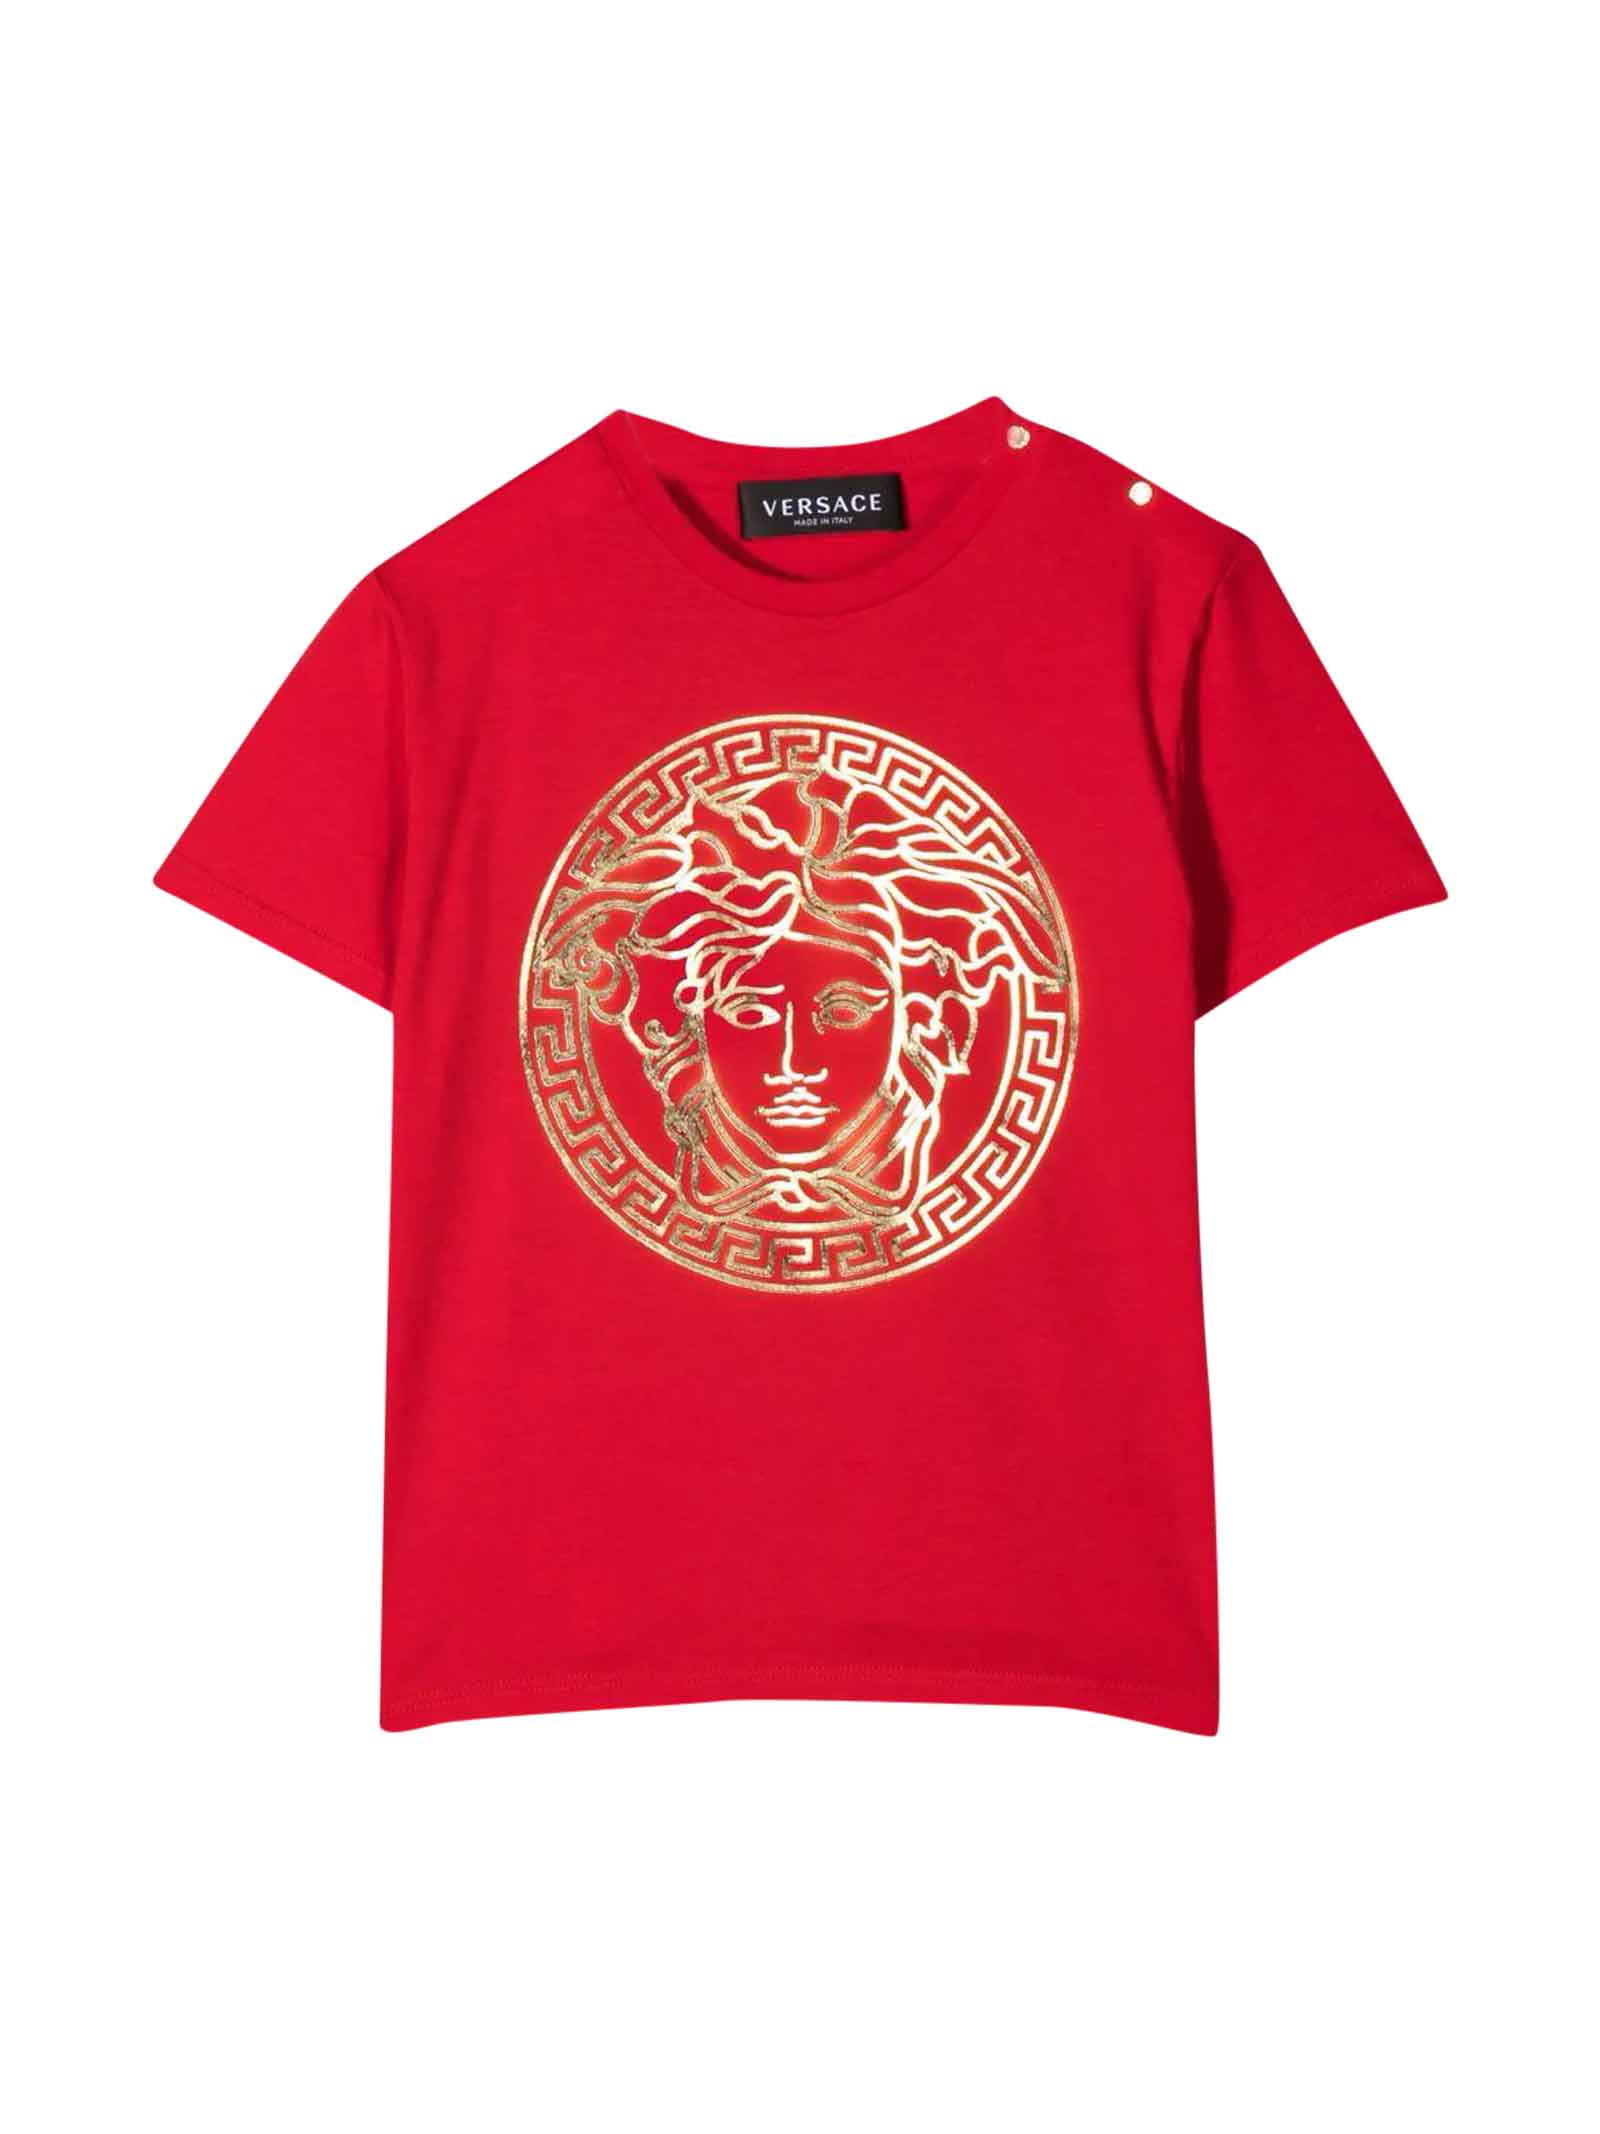 Versace Young Newborn Red T-shirt